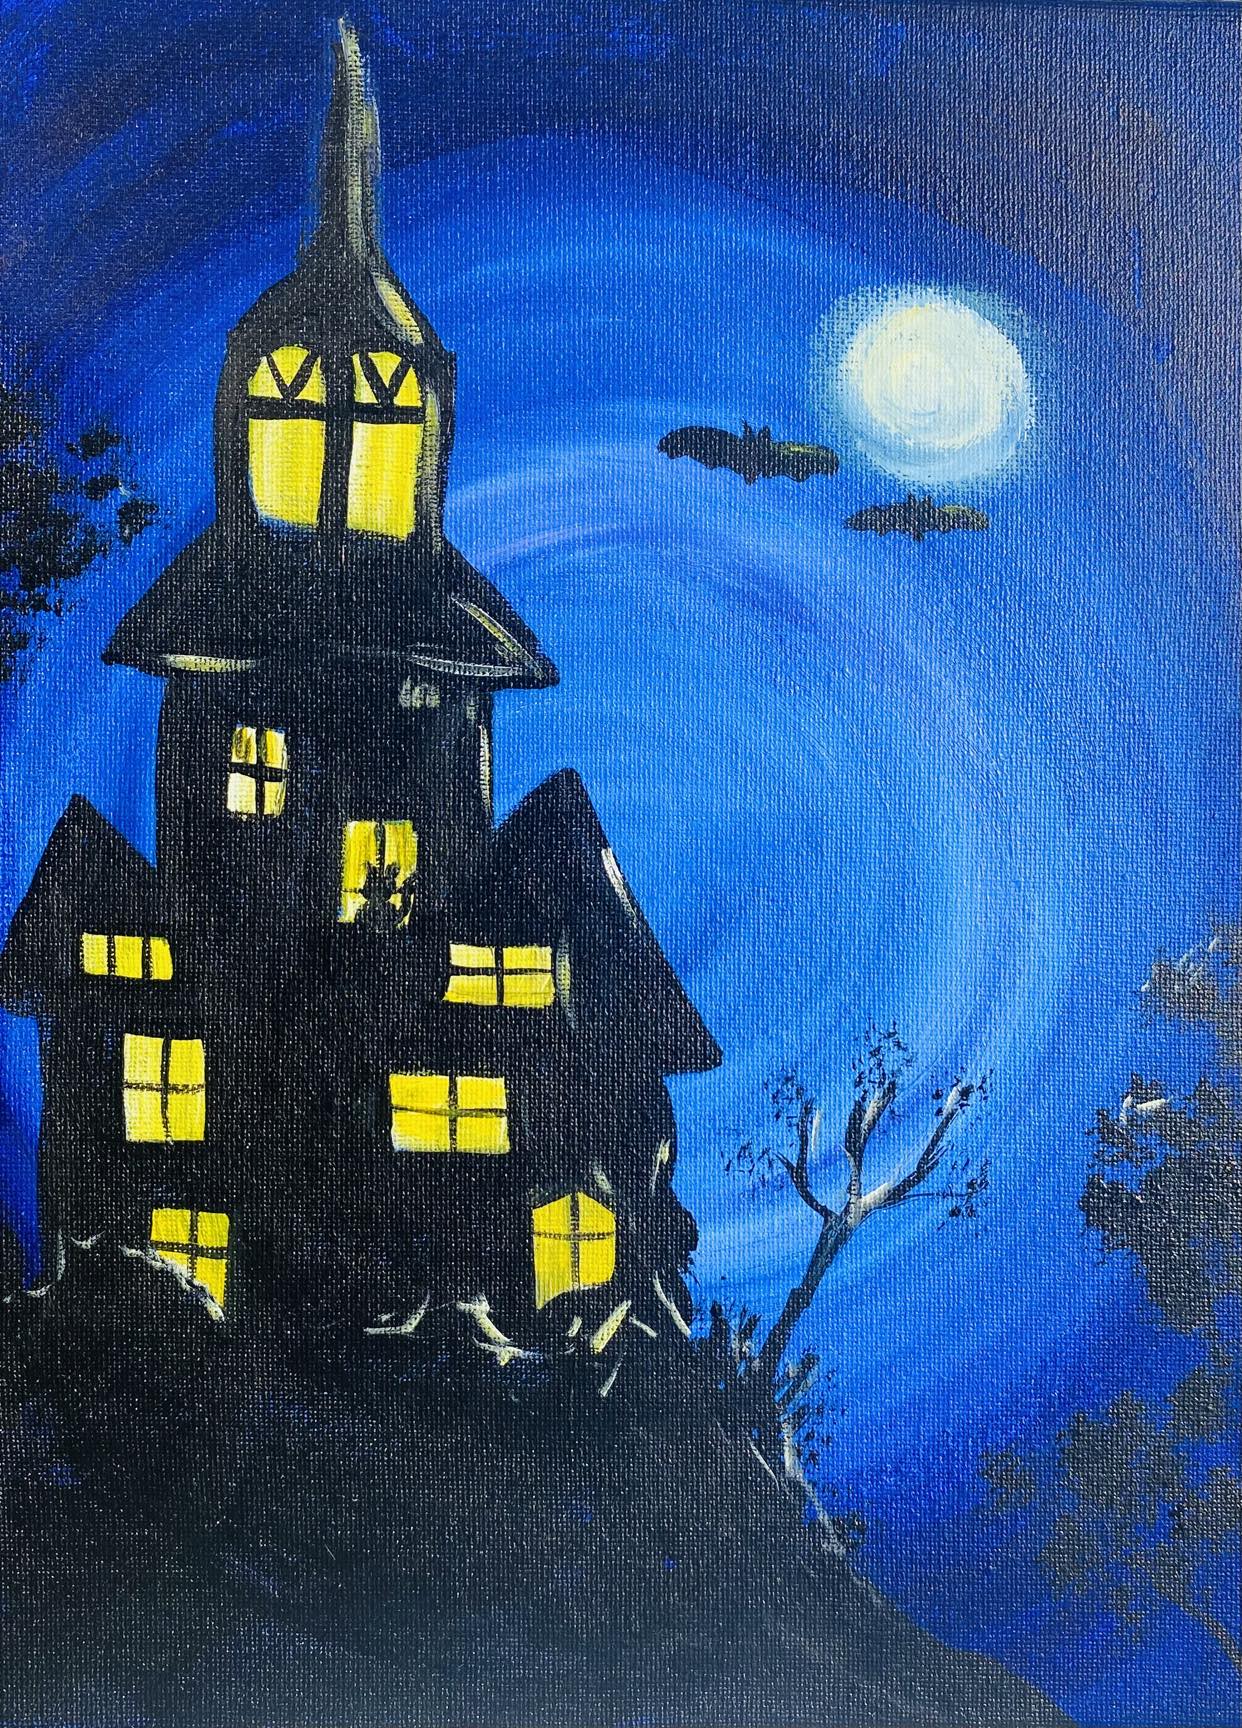 Haunted House Blue night sky